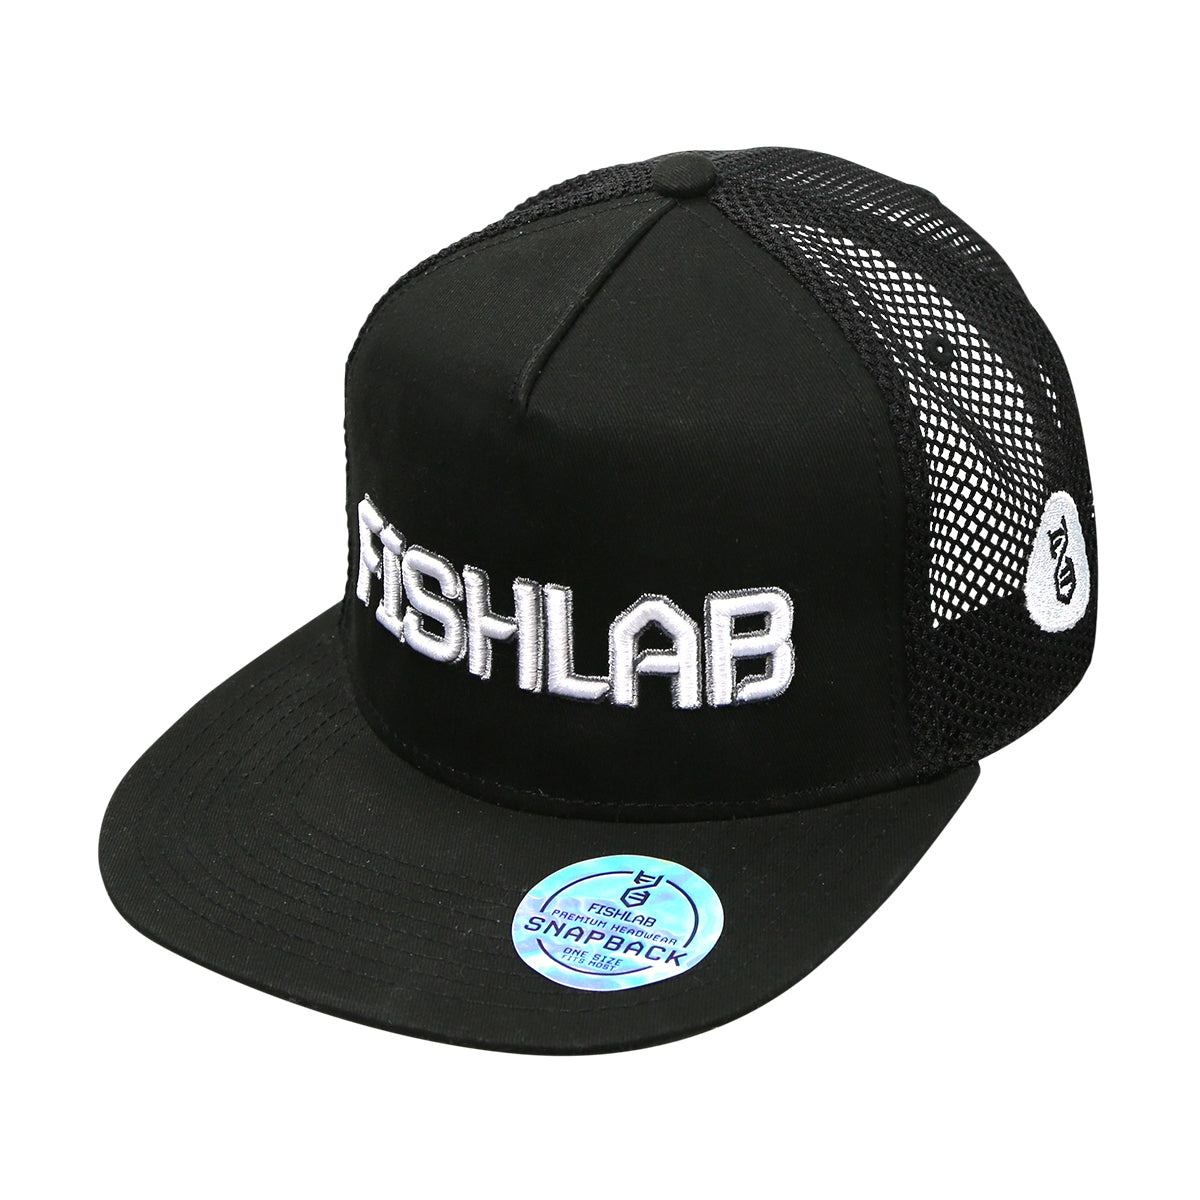 Wikjxiz Black-Labs-Matter Mesh Hat Trucker Hats Adjustable Baseball Cap for  Men Women Black Fishing Caps